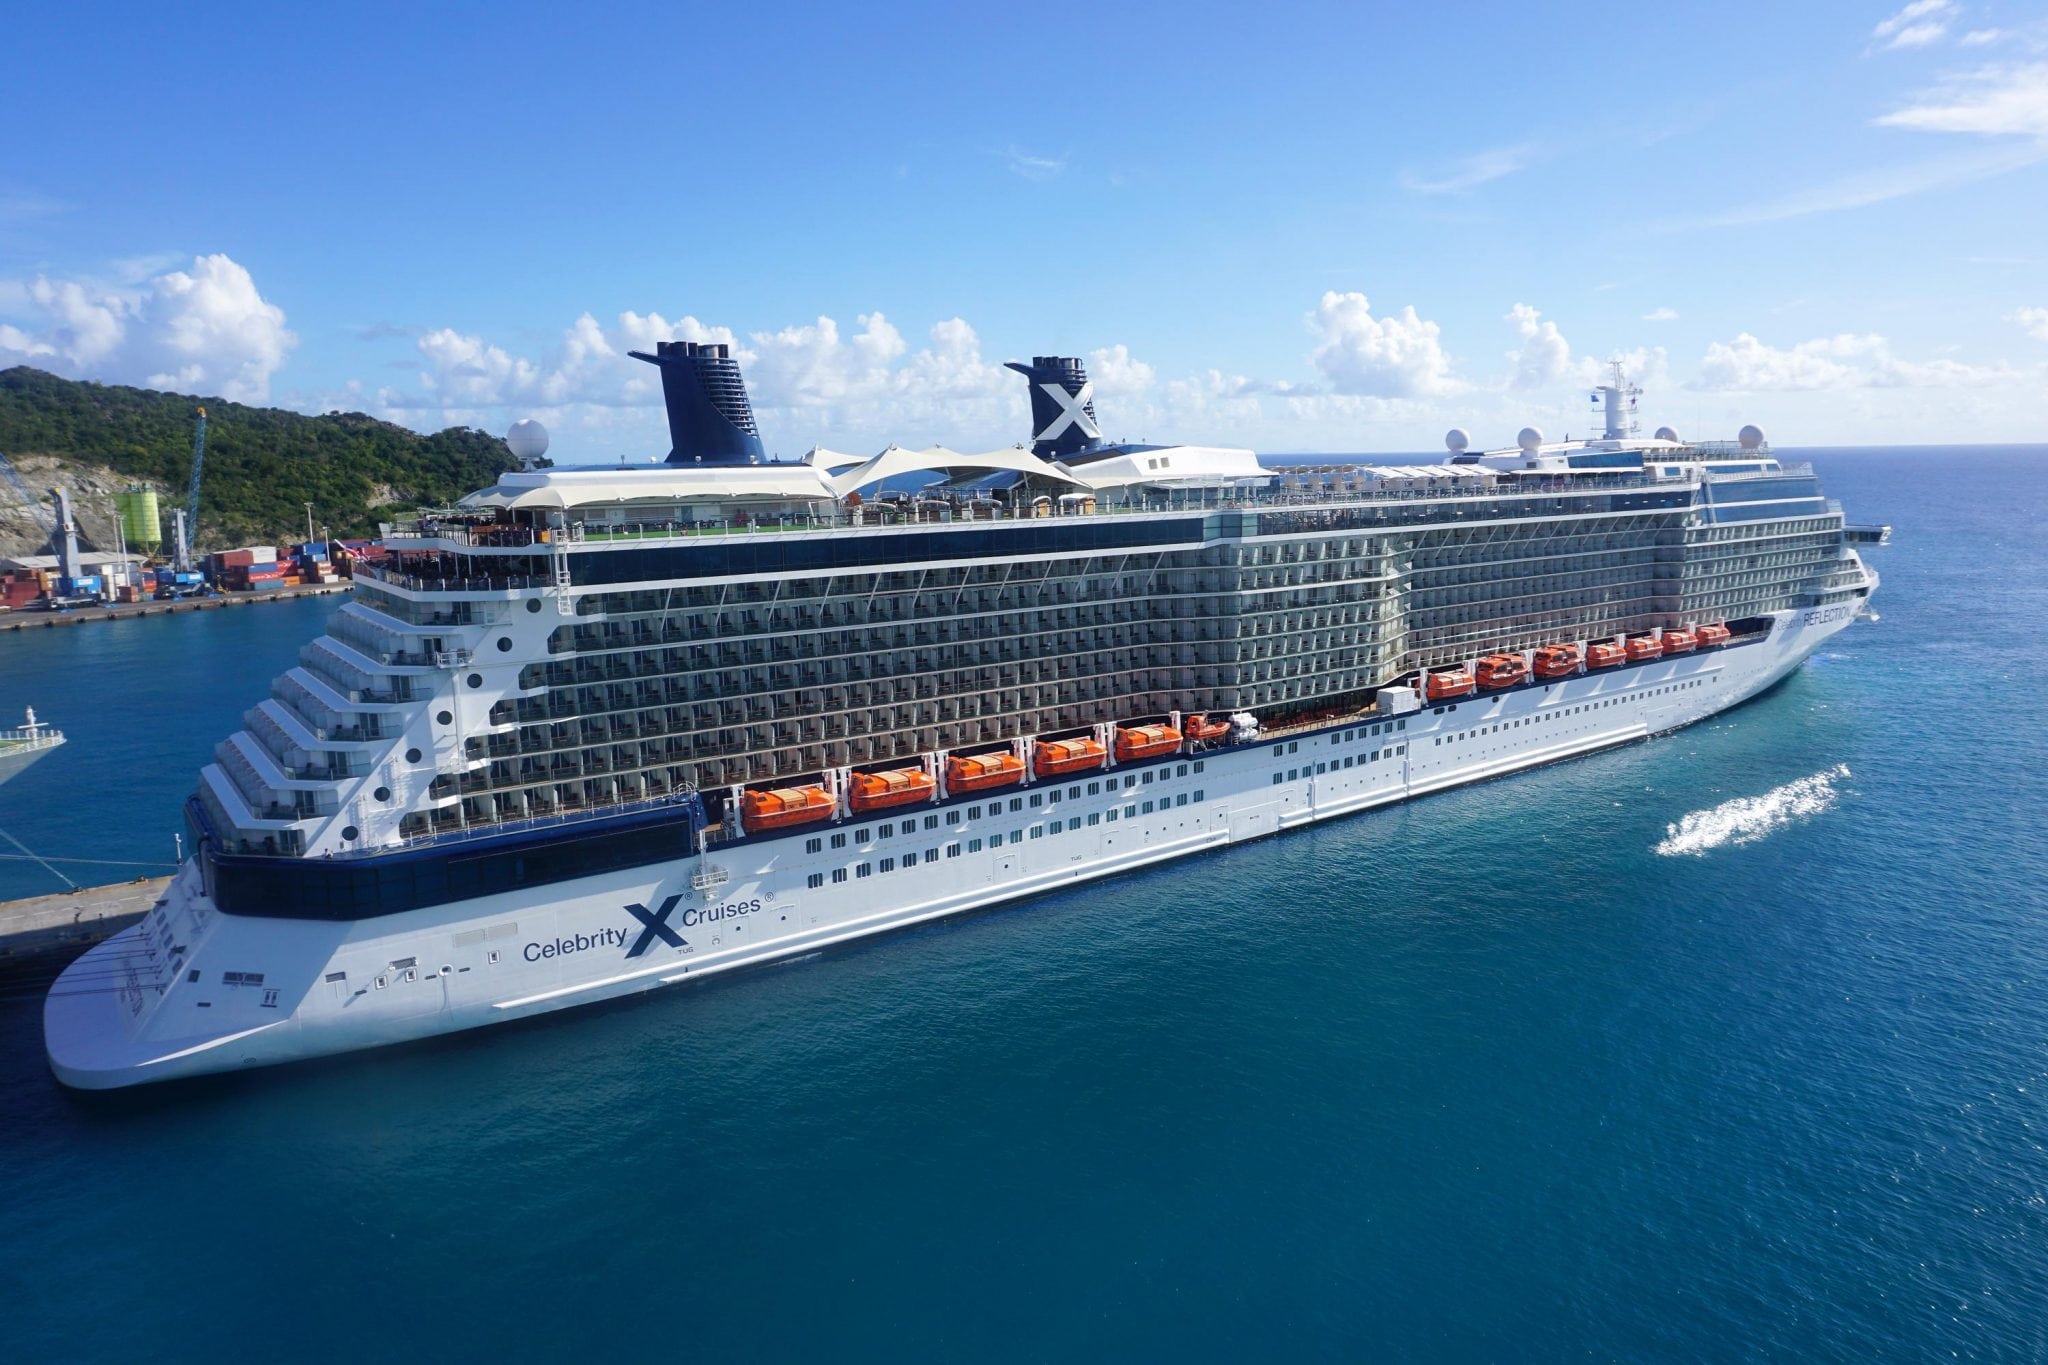 celebrity eastern caribbean cruise reviews